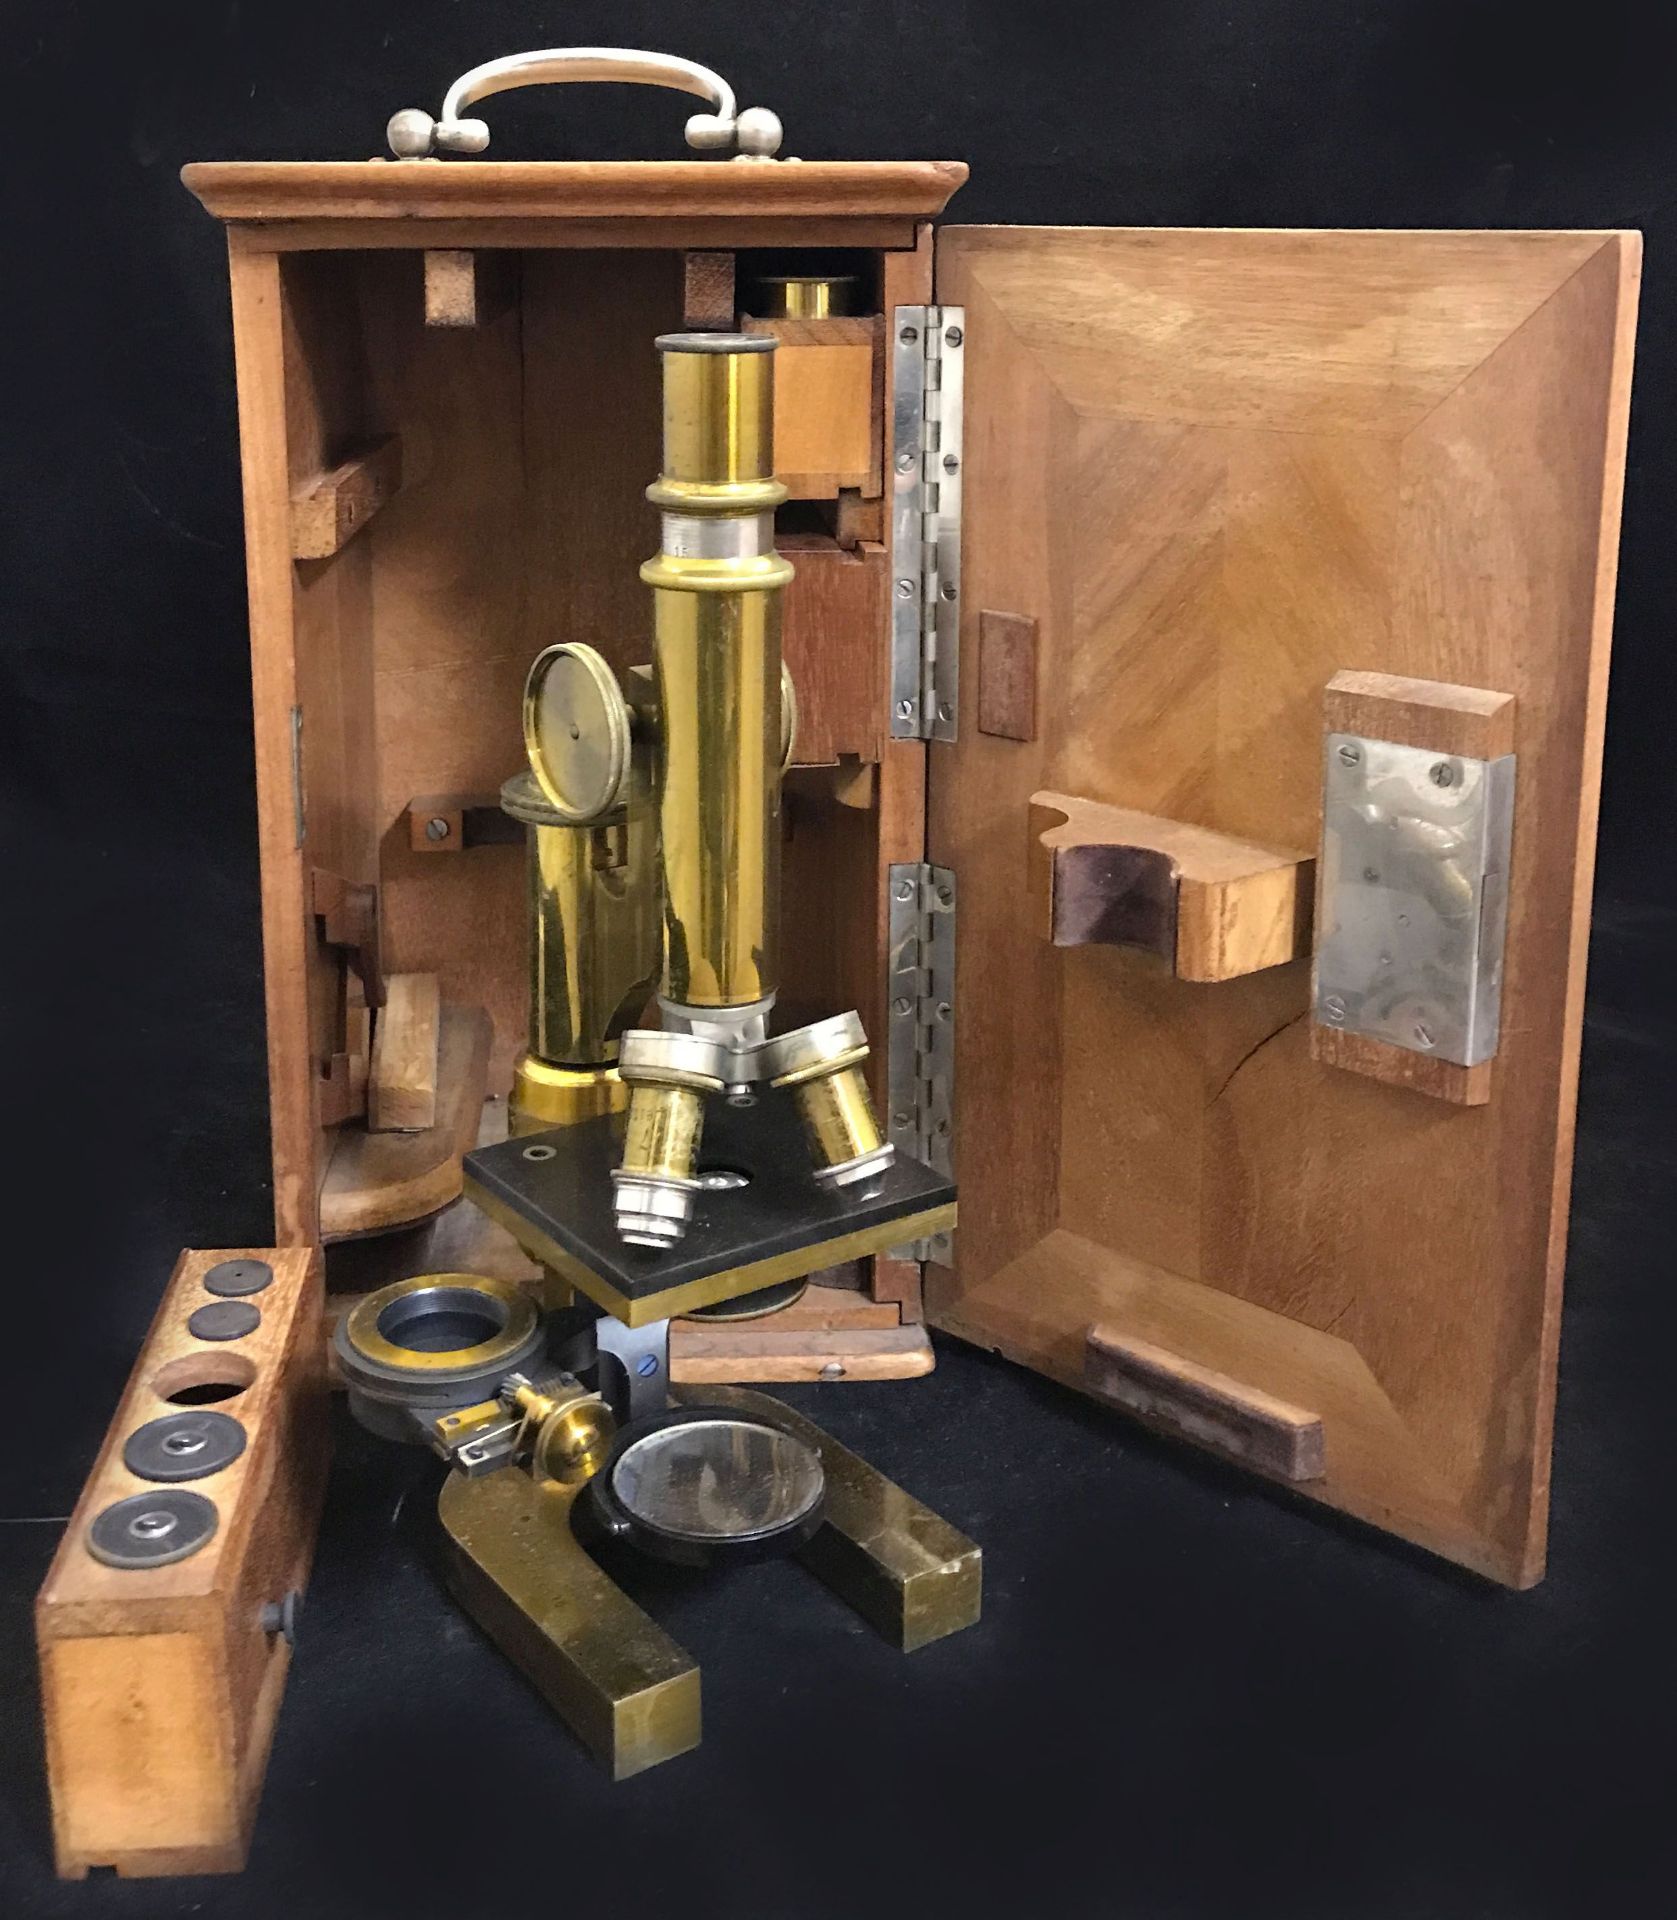 Mikroskop in Holzkasten, um 1900, E. Leitz Wetzlar, Nr. 22296, Messingmikroskop mit drei Linsen,